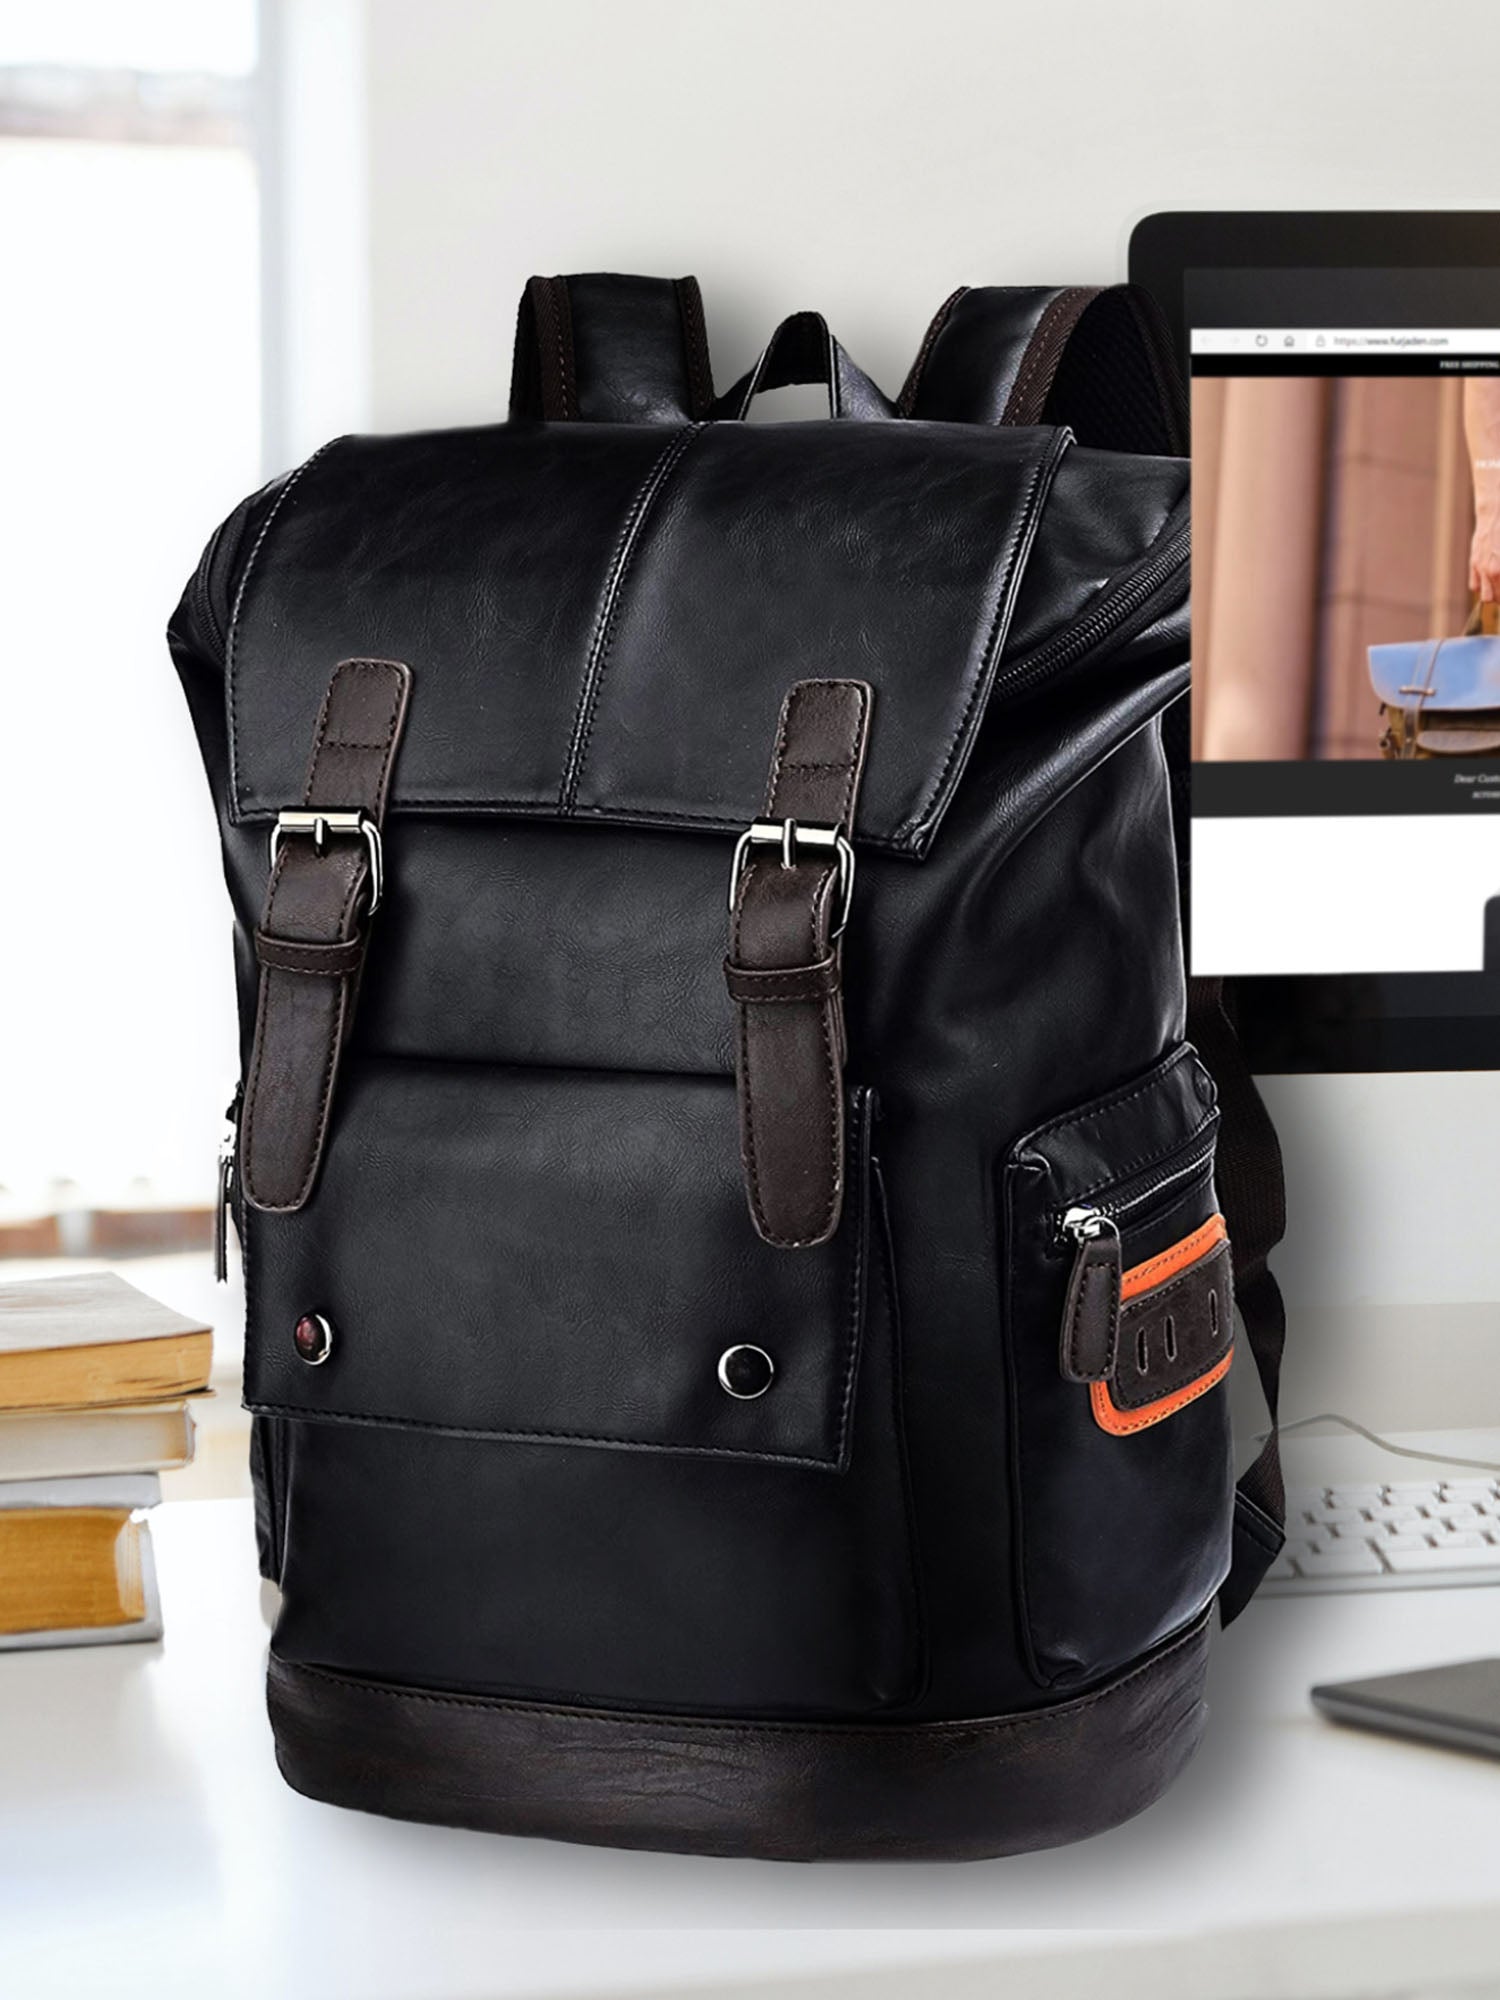 Anti Theft Laptop Backpack | Black